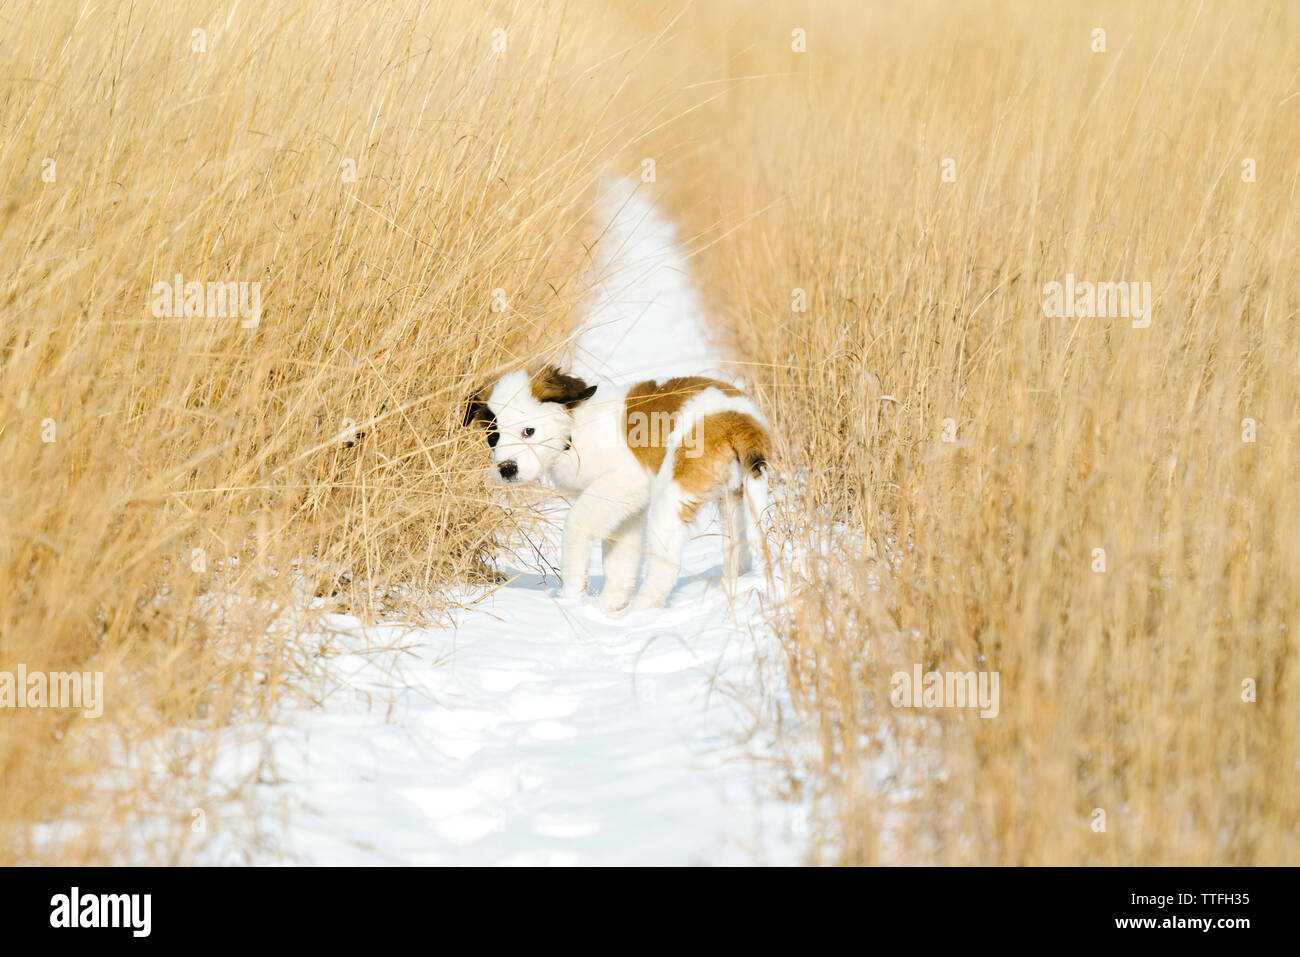 A Saint Bernard puppy in a snowy field Stock Photo